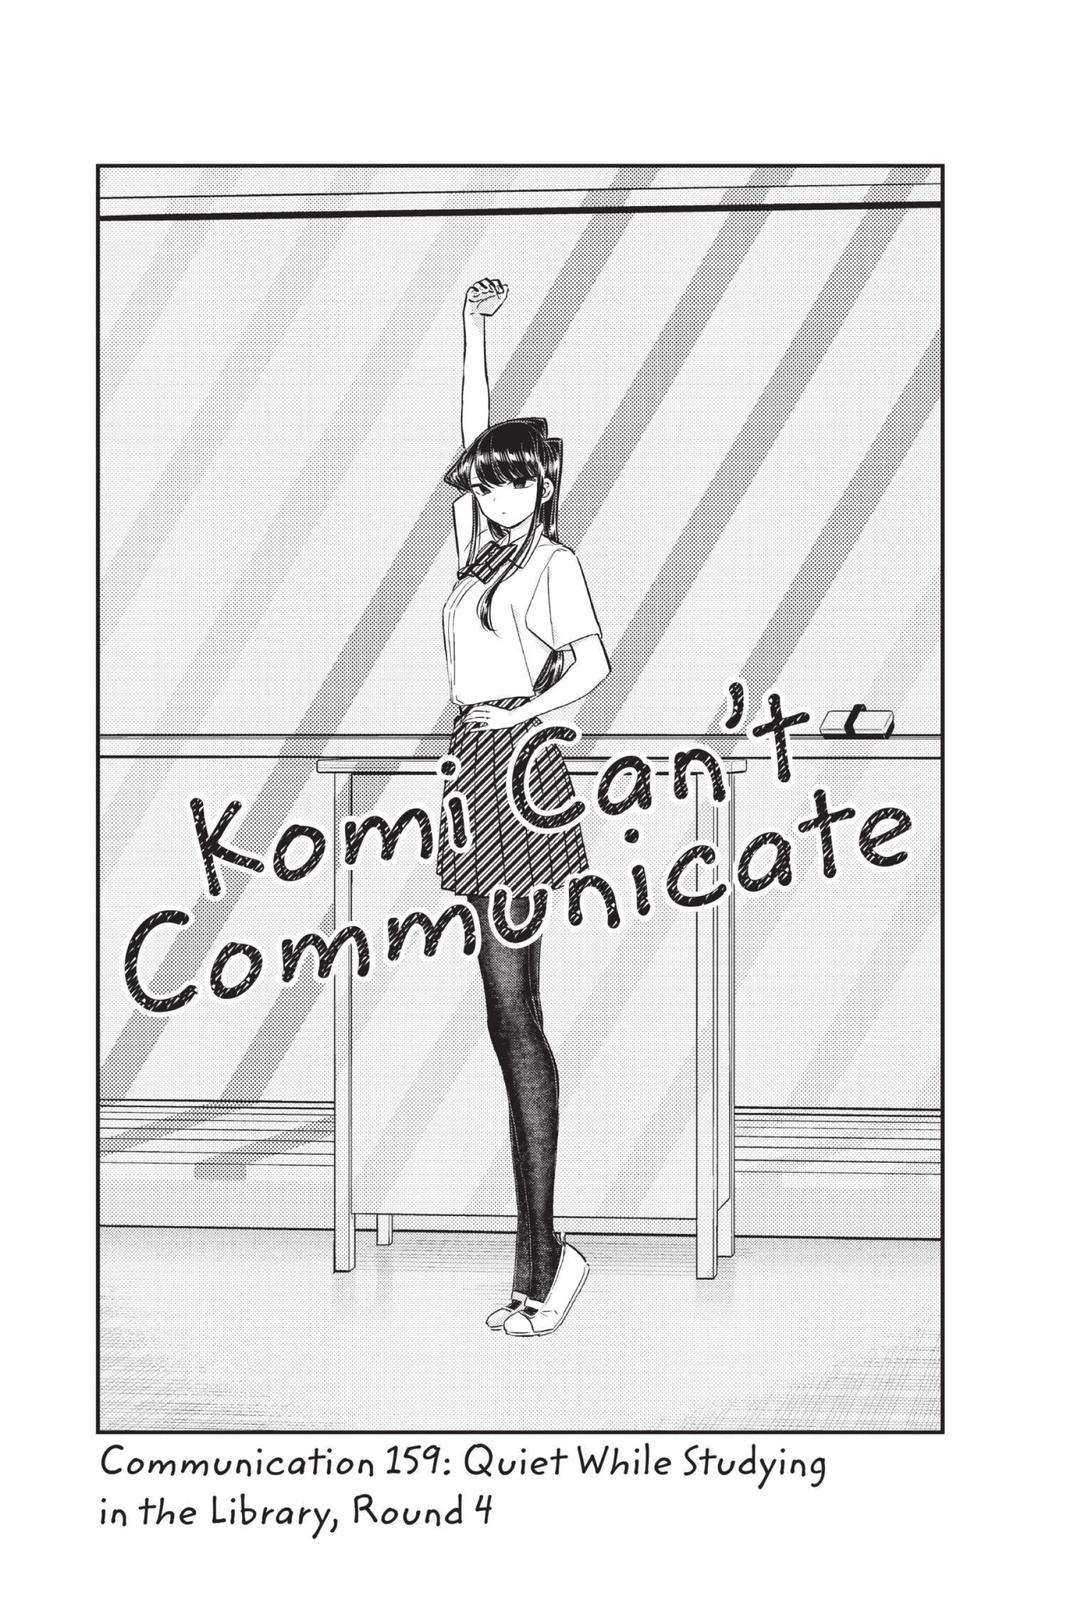 komi san manga,komi san,komi san can't communicate,komi san wa komyushou desu,komi can't communicate manga,komi-san,komi san can't communicate manga,komi san is bad at communication,komi san manga online,komi san wa komyushou desu manga,komi san read online,miss komi is bad at communication,komi can't communicate read online,komi can't communicate,komi san is bad at communication manga,where to read komi can t communicate,komi is bad at communication,komi san can t communicate read online,komi san brother,san manga,komi scans,komi can't communicate volume 1 free,miss komi is bad at communication chapter 1,miss komi is bad at communication read online,tadano komi san,komi can't communicate manga volumes,komi can t communicate english,komi san can't communicate vol 1,komi san anime episode 1,komi san manga rock,komi hair salon,komi can't communicate english,miss komi is bad at communicating,komi san,komi san wa komyushou desu,komi san anime,komi san is bad at communication,komi san can't communicate,komi san wa komyushou desu anime,komi san is bad at communication anime,komi san can't communicate manga,komi san shirt,komi san cat ears,komi san sticker,komi san tv tropes,komi san hoodie,komi san body pillow,komi san fanart,komi san art,komi san merch,komi san cute,komi san birthday,komi san wa komyusho desu,komi san t shirt,komi san brother,komi san poster,komi san manga amazon,komi san amazon,komi san phone case,komi san jacket,komi san volume 3,komi san volume 4,komi san francisco,will komi san get an anime adaptation,komi san line stickers,where can i read komi san,komi san,komi san manga,komi san is bad at communication,komi san wa komyushou desu anime,komi san kissmanga,komi san is bad at communication manga,komi san can't communicate,osana najimi komi san,komi san manga rock,komi san manga online,komi san wa komyushou desu doujinshi,komi san volume 1,komi san wa komyushou desu volume 1,komi ,komi-san,komi-san,osana najimi,komi san wa komyushou desu,komi shouko,komi can't communicate,komi san wa komyushou desu,najimi,tadano kun,komi san can't communicate,komi san can't communicate,tomohito oda,miss komi is bad at communication,tadano anime,komi san manga,tadano komi san,komi san brother,komi san anime,komi san manga,komi can't communicate anime,komi anime,isagi,tadano komi san,how many volumes of komi can't communicate are there,how many volumes of komi can t communicate are there,komi can't communicate najimi,osana najimi komi san,komi san is bad at communication,onemine,komi anime,komi san wa komyushou desu manga,komi san wa komyushou desu anime,komi,komi can't communicate manga,komi san volumes,komi san wa komyushou desu manga,osana najimi komi san,komi can't communicate all volumes,komi wiki,komi is bad at communication,komi san can't communicate manga,komi san volumes,tadano,komi wiki,komi shouko anime,komi san volumes,nakanaka,geitaidenwa,blackboard desu,shinobino,teshigawara,komi can't communicate manga volumes,komi san volumes,komi can't communicate volume 1,desu library,sukida,komi san is bad at communication anime,komi can t communicate volume 2,komi san is bad at communication manga,desu blackboard,setoka,tadano wiki,komi san keychain,komi san cosplay,komi can't communicate vol 2,komi san volume 1,komi san volume 1,komi san fanart,komi can't communicate vol 10,komi san read online,komi san manga online,komi san is bad at communication manga,komi san body pillow,komi san anime confirmed,makeru,fushima,how to pronounce gyaru,san volumes,san volume,shouko ramen,tadano t shirts,t time desu,komi-san merch,komi-san art,komi san plush,komi san merch,komi can t communicate english,komi scans,komi san meme,komi san can't communicate vol 1,komi san can't communicate vol 1,komi san anime episode 1,komi can't communicate volume 8,komi can't communicate vol 1,komi san anime adaptation,komi hair salon,komi can't communicate volume 2,komi can't communicate vol 4 release date,komi can't communicate english,komi can t communicate amazon,kyoto animation komi san,komi san merchandise,komi can't communicate volume 7,komi can't communicate figure,miss komi is bad at communication chapter 1,miss komi is bad at communicating,miss komi is bad at communication read online,miss komi is bad at communication anime,my desu blackboard